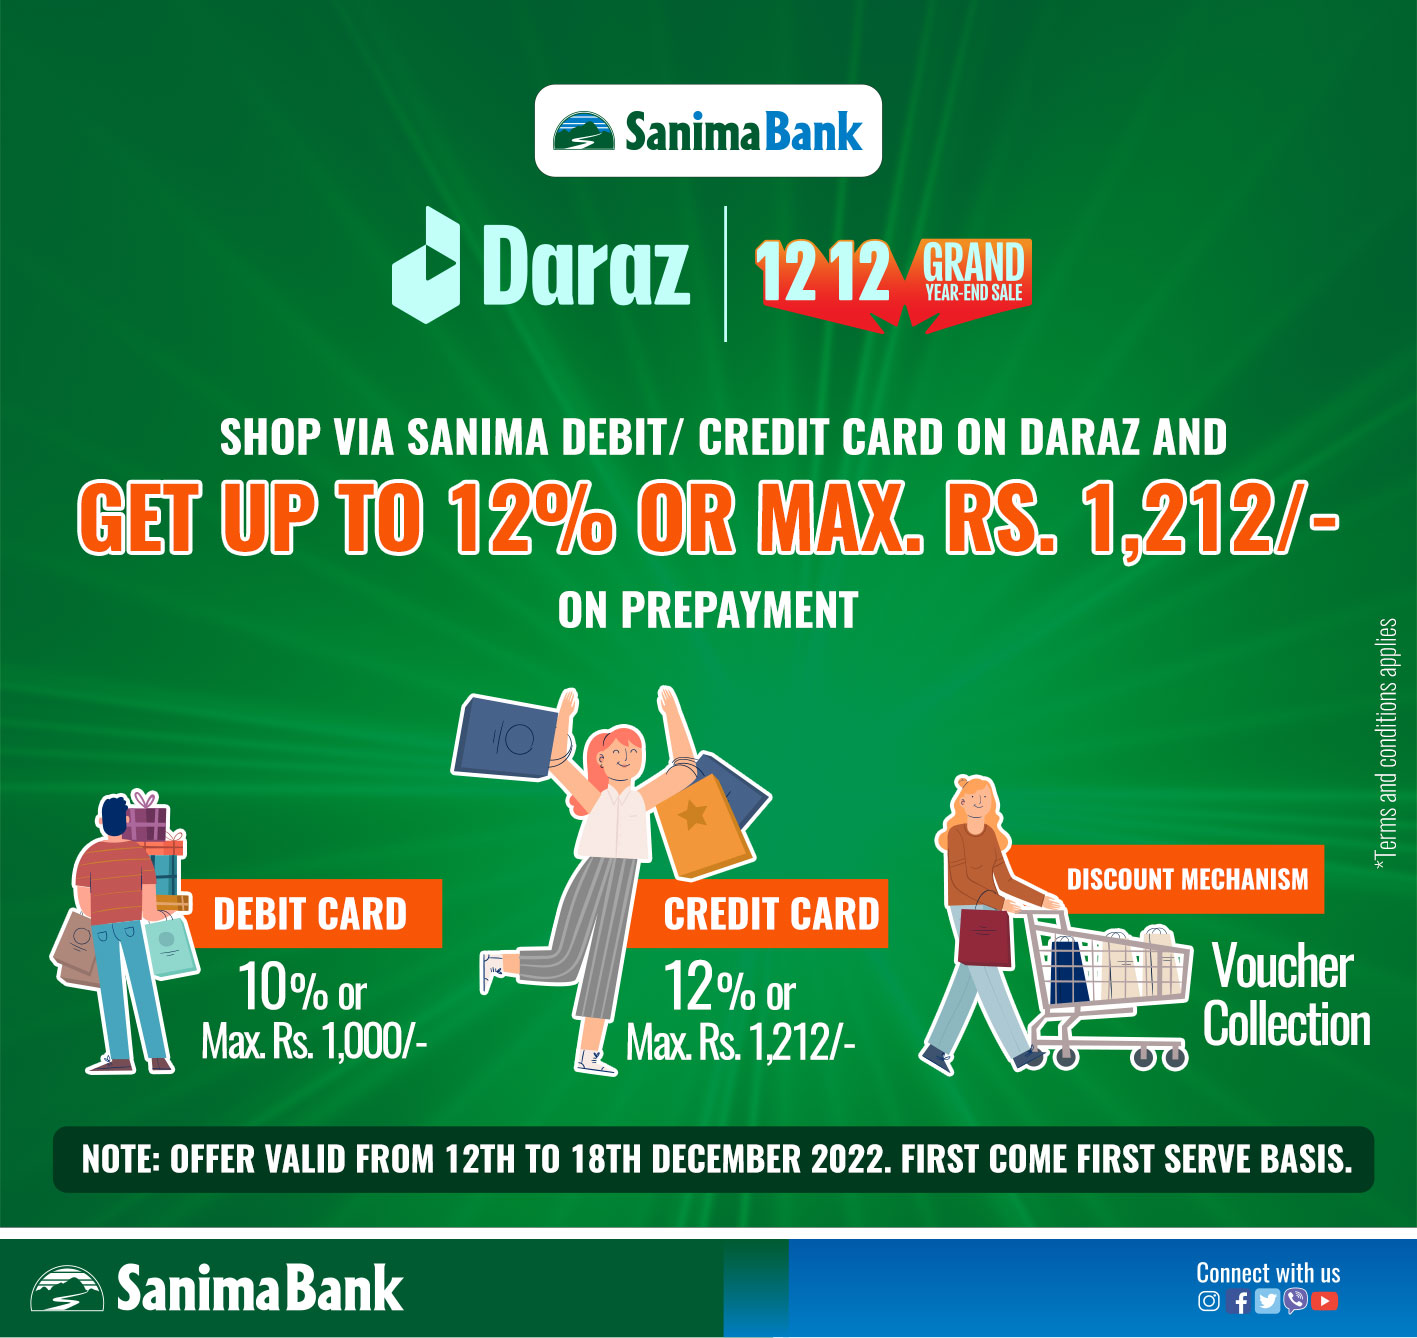 Sanima Bank partners with Daraz for “Daraz 12.12″ campaign